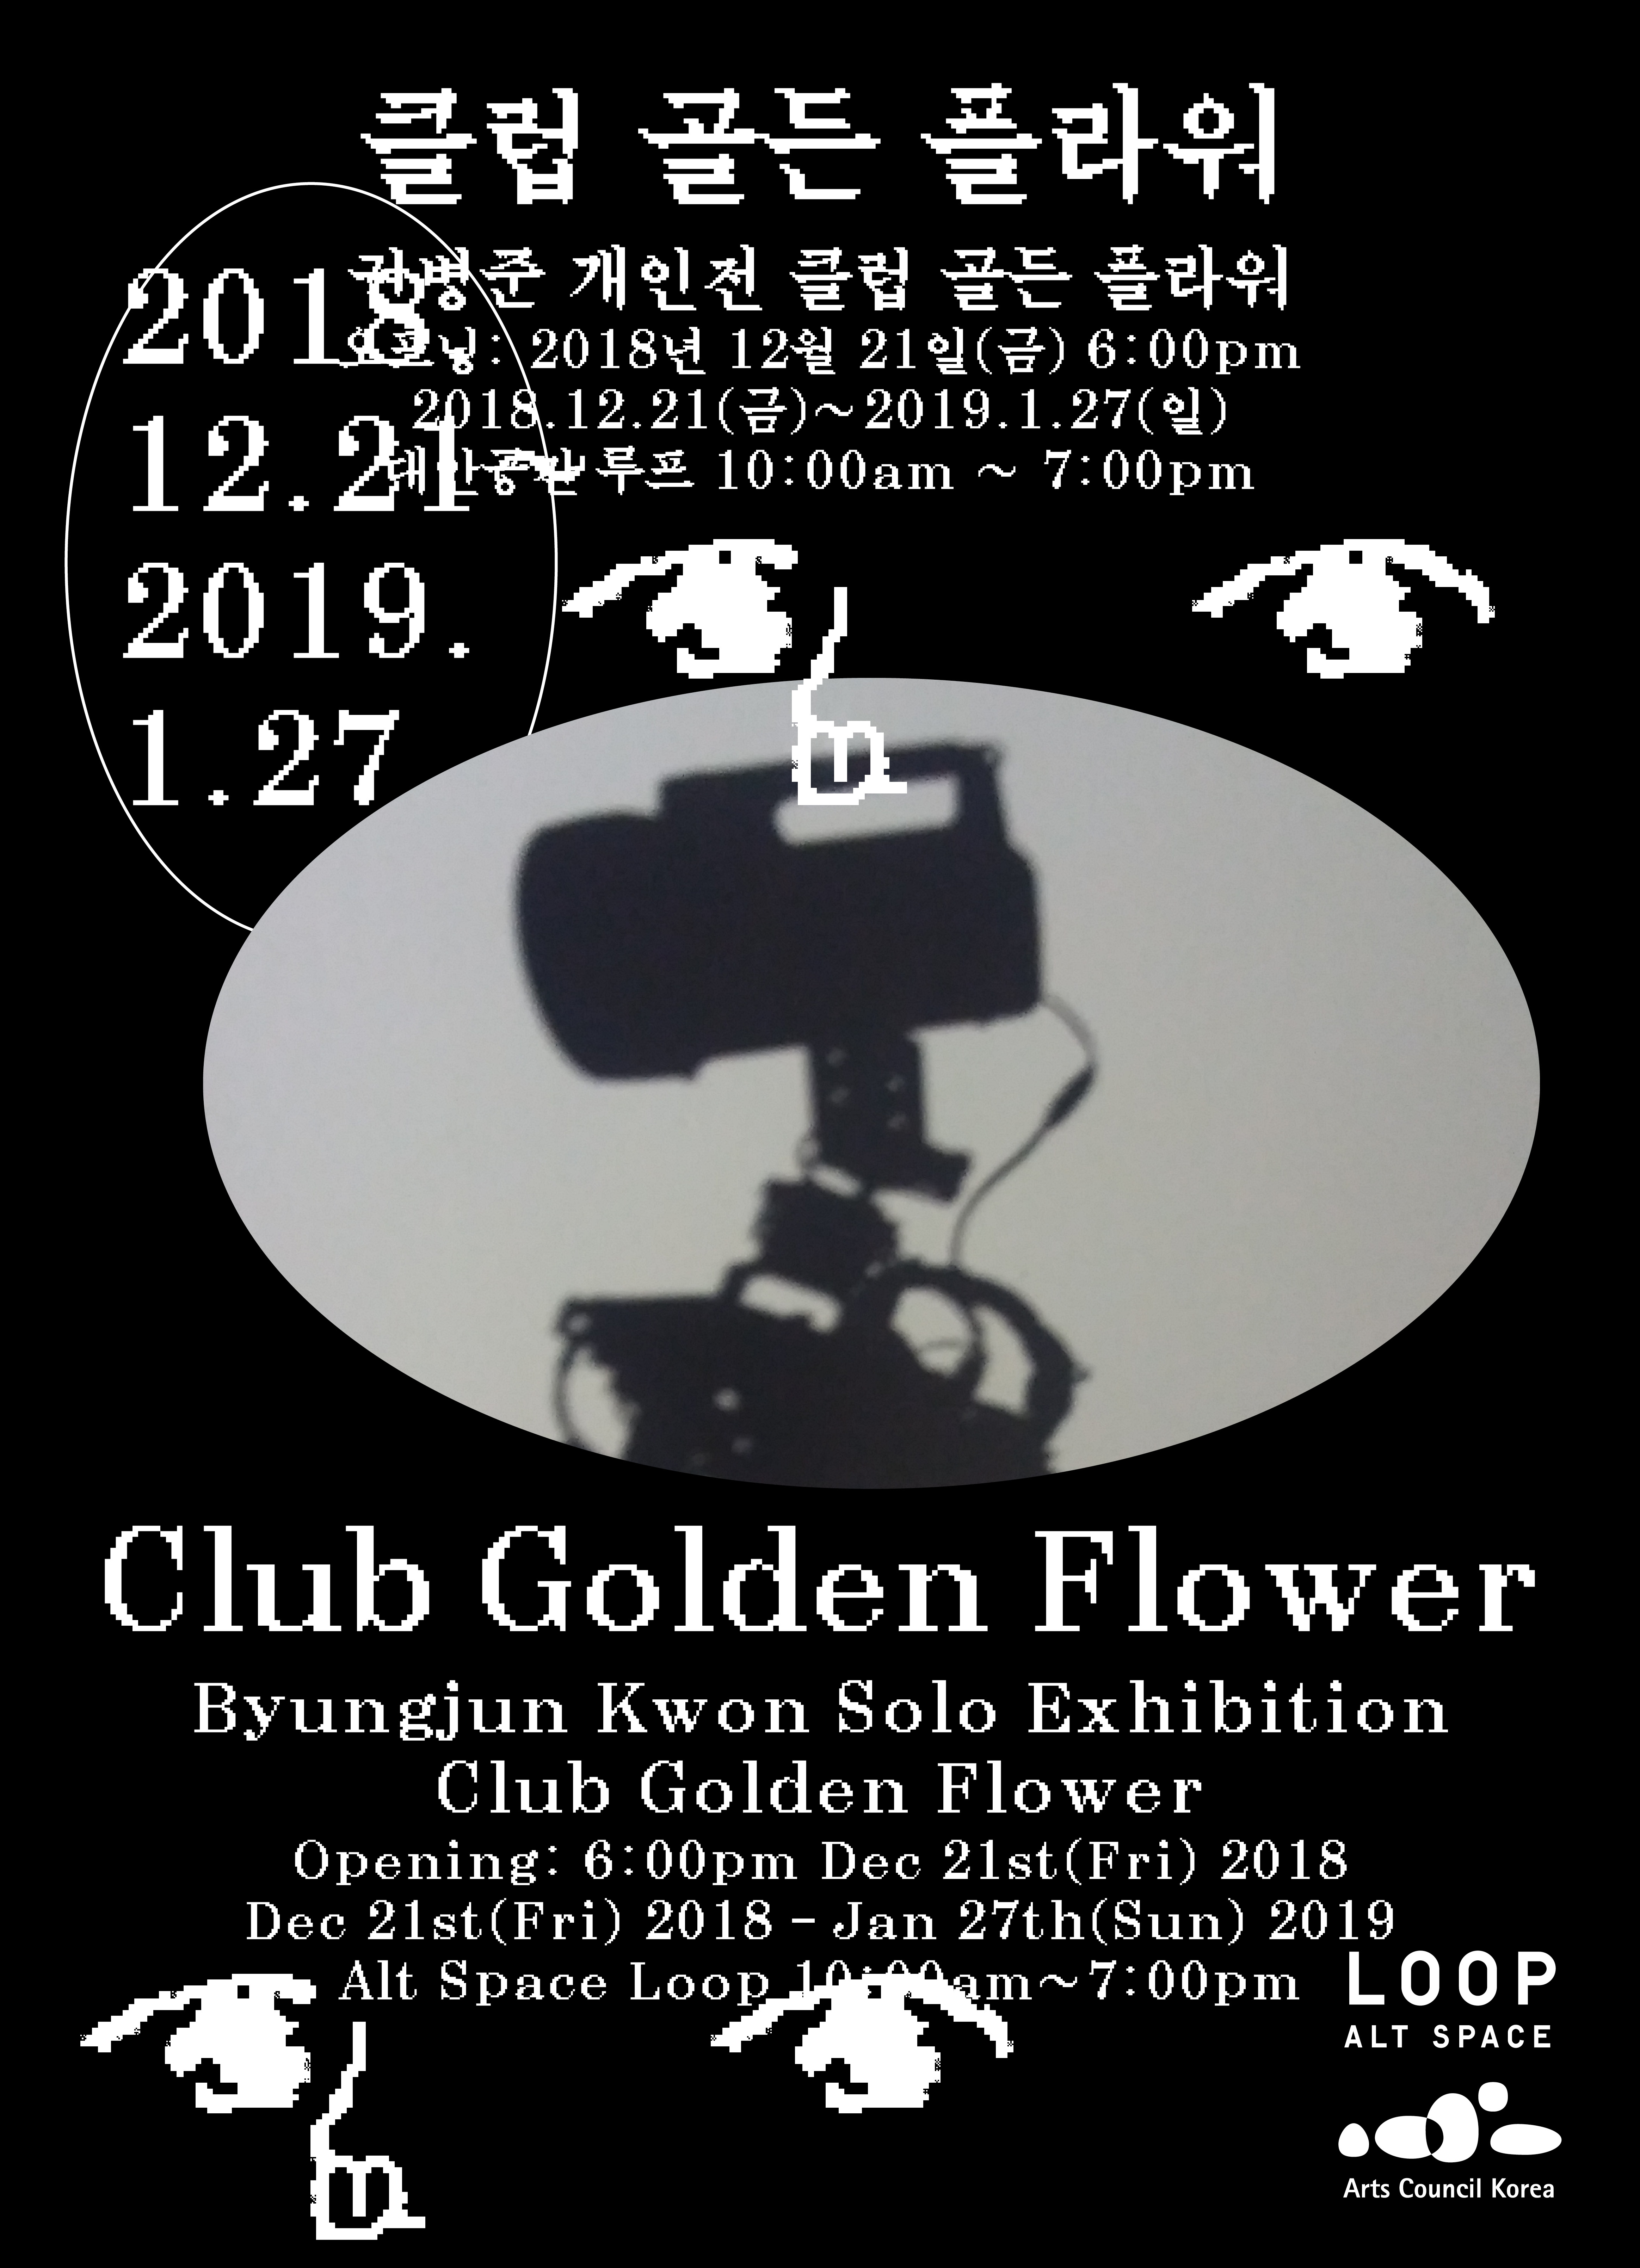 Byungjun Kwon Solo Exhibition: Club Golden Flower